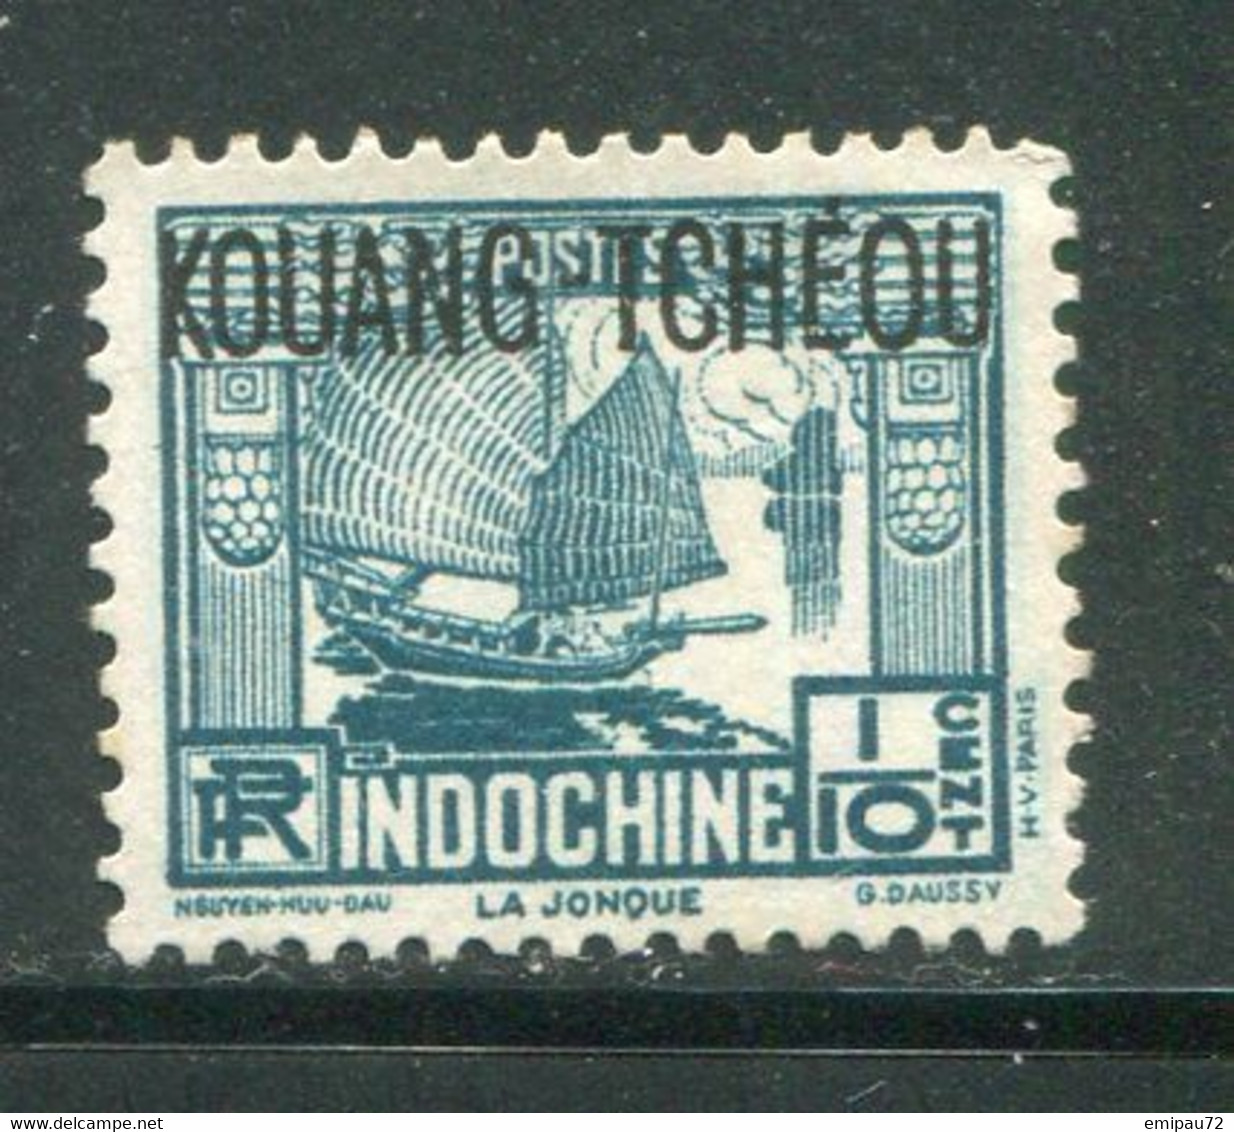 KOUANG TCHEOU- Y&T N°97- Oblitéré - Used Stamps